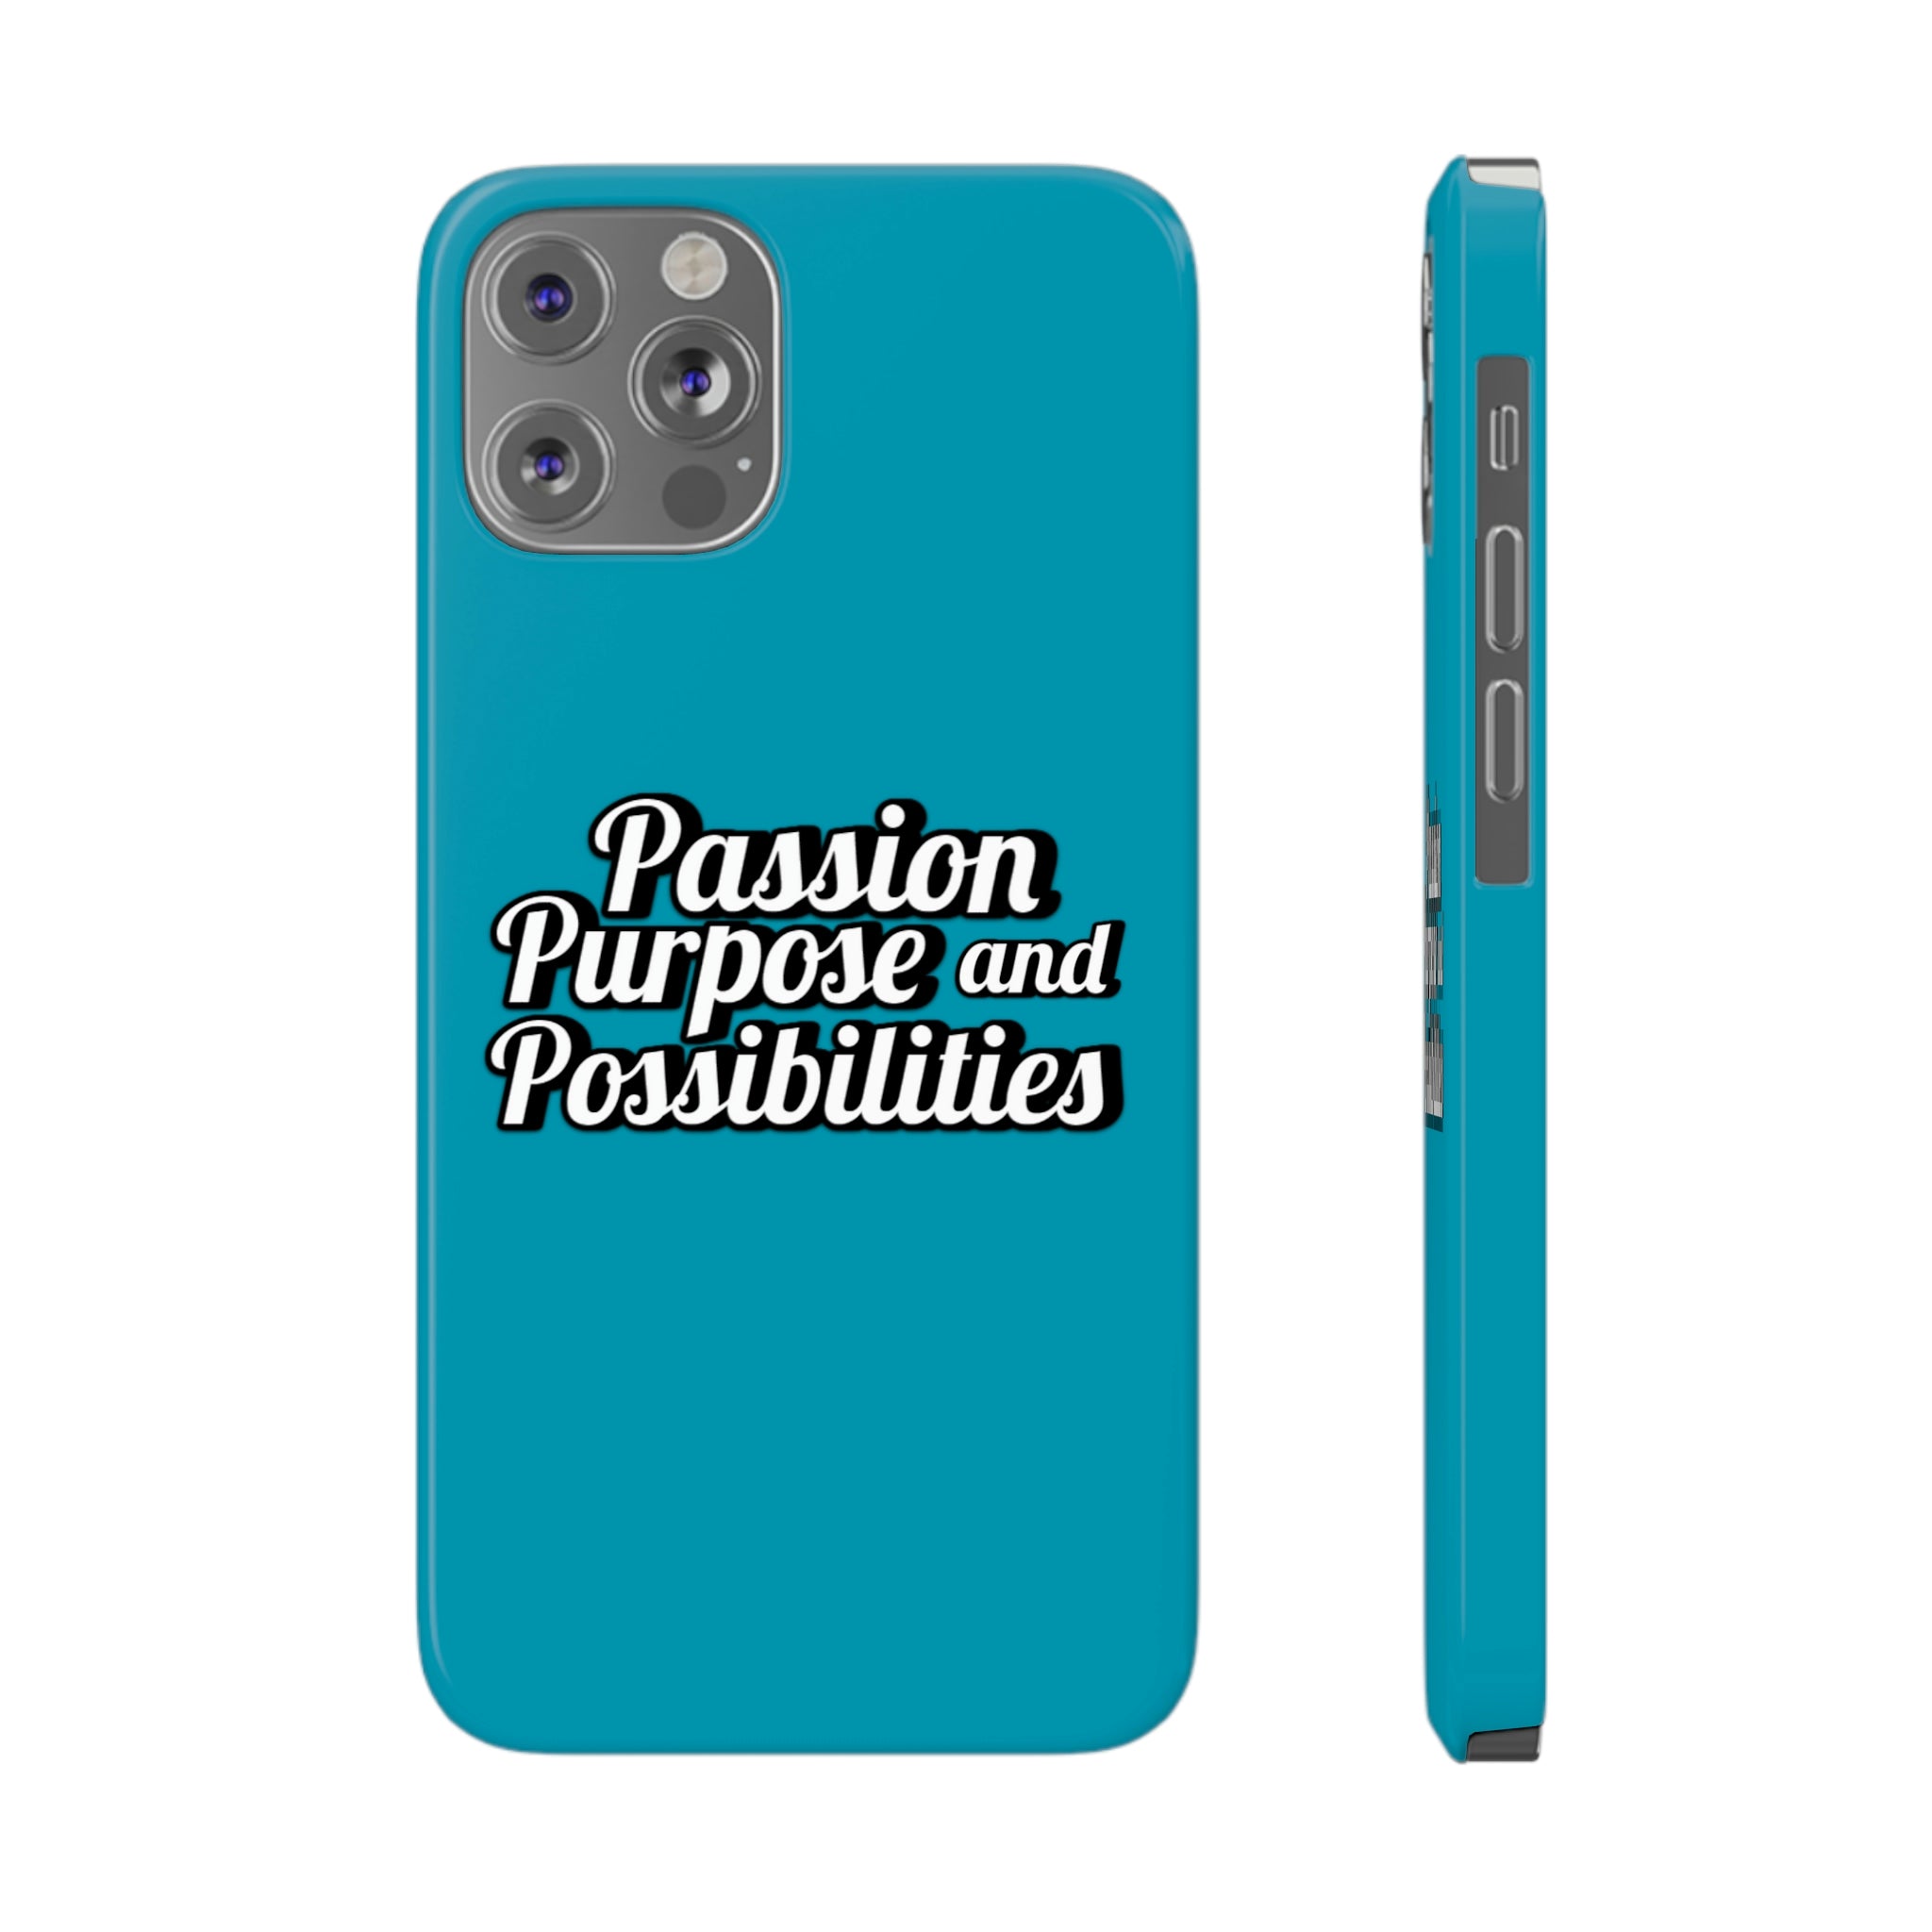 Passion Purpose and Possibilities Slim Phone Cases